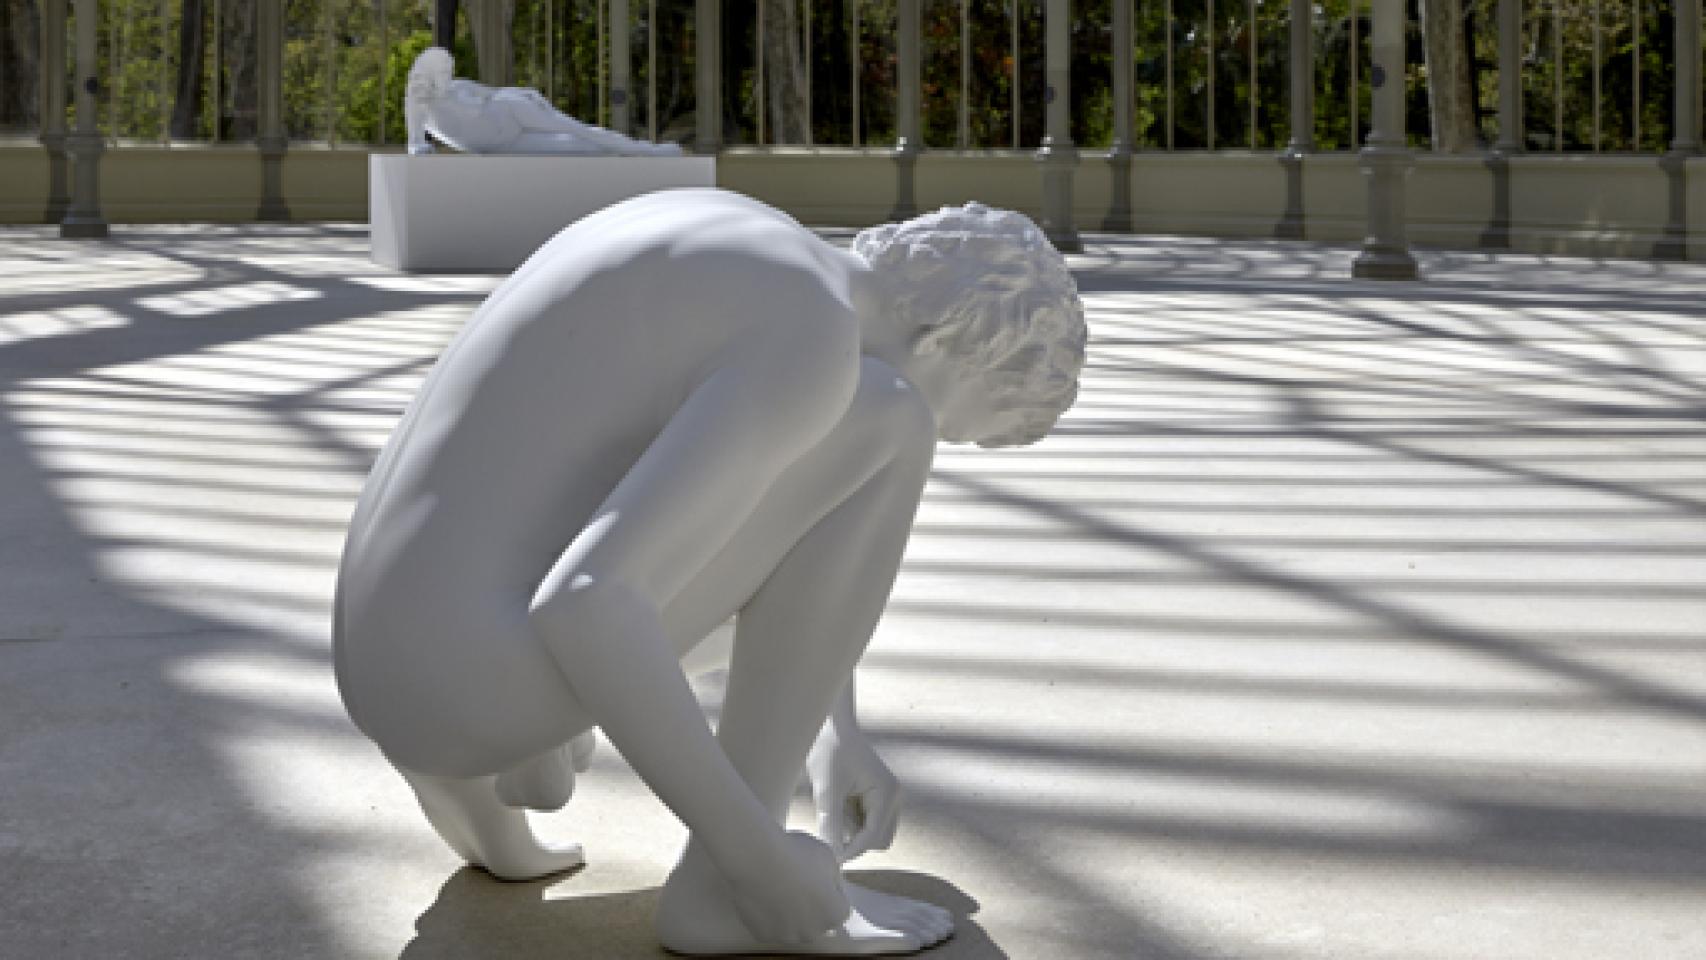 Image: La escultura lenta de Charles Ray